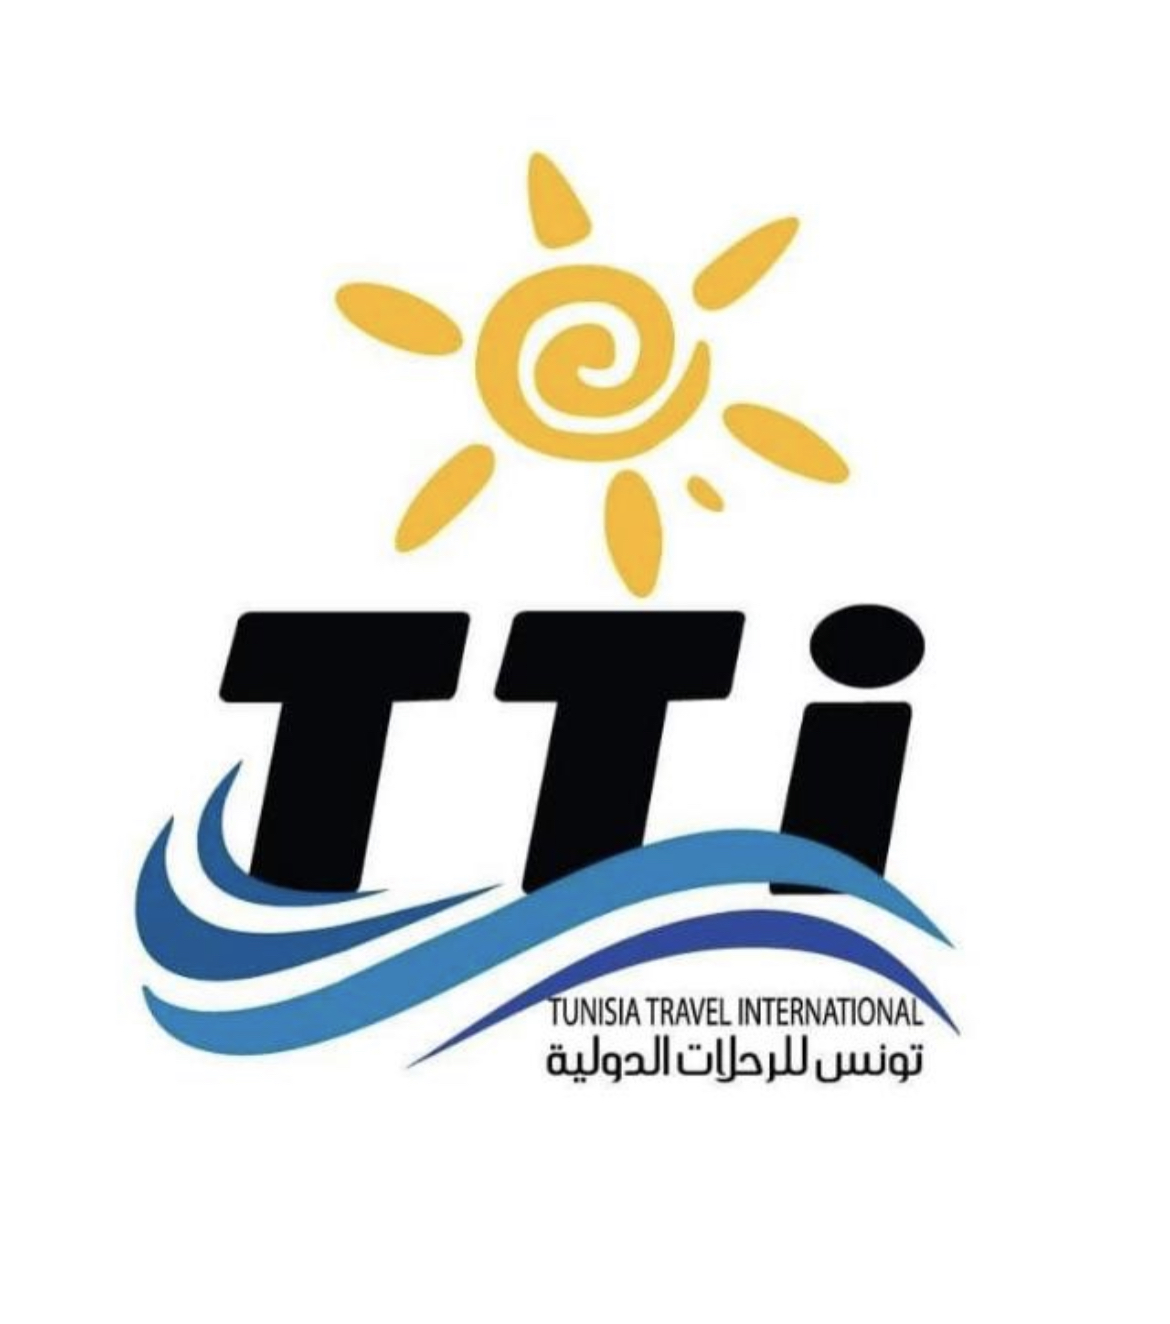 tunisia travel international